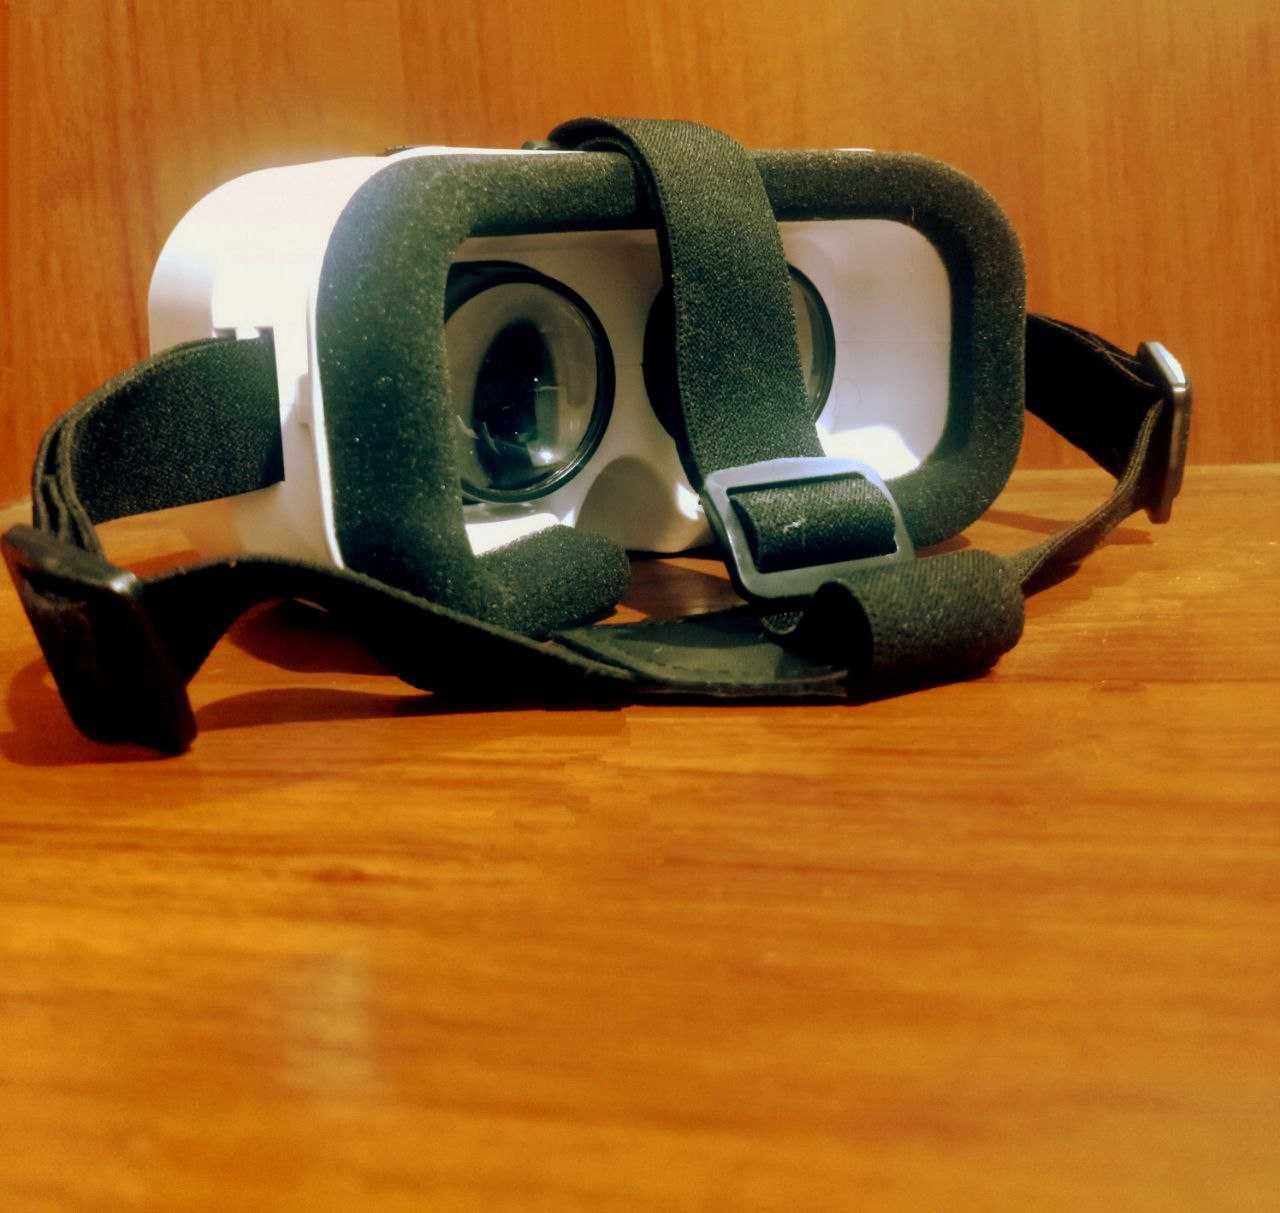 Очки виртуальной реальности 3D VR Shinecon White